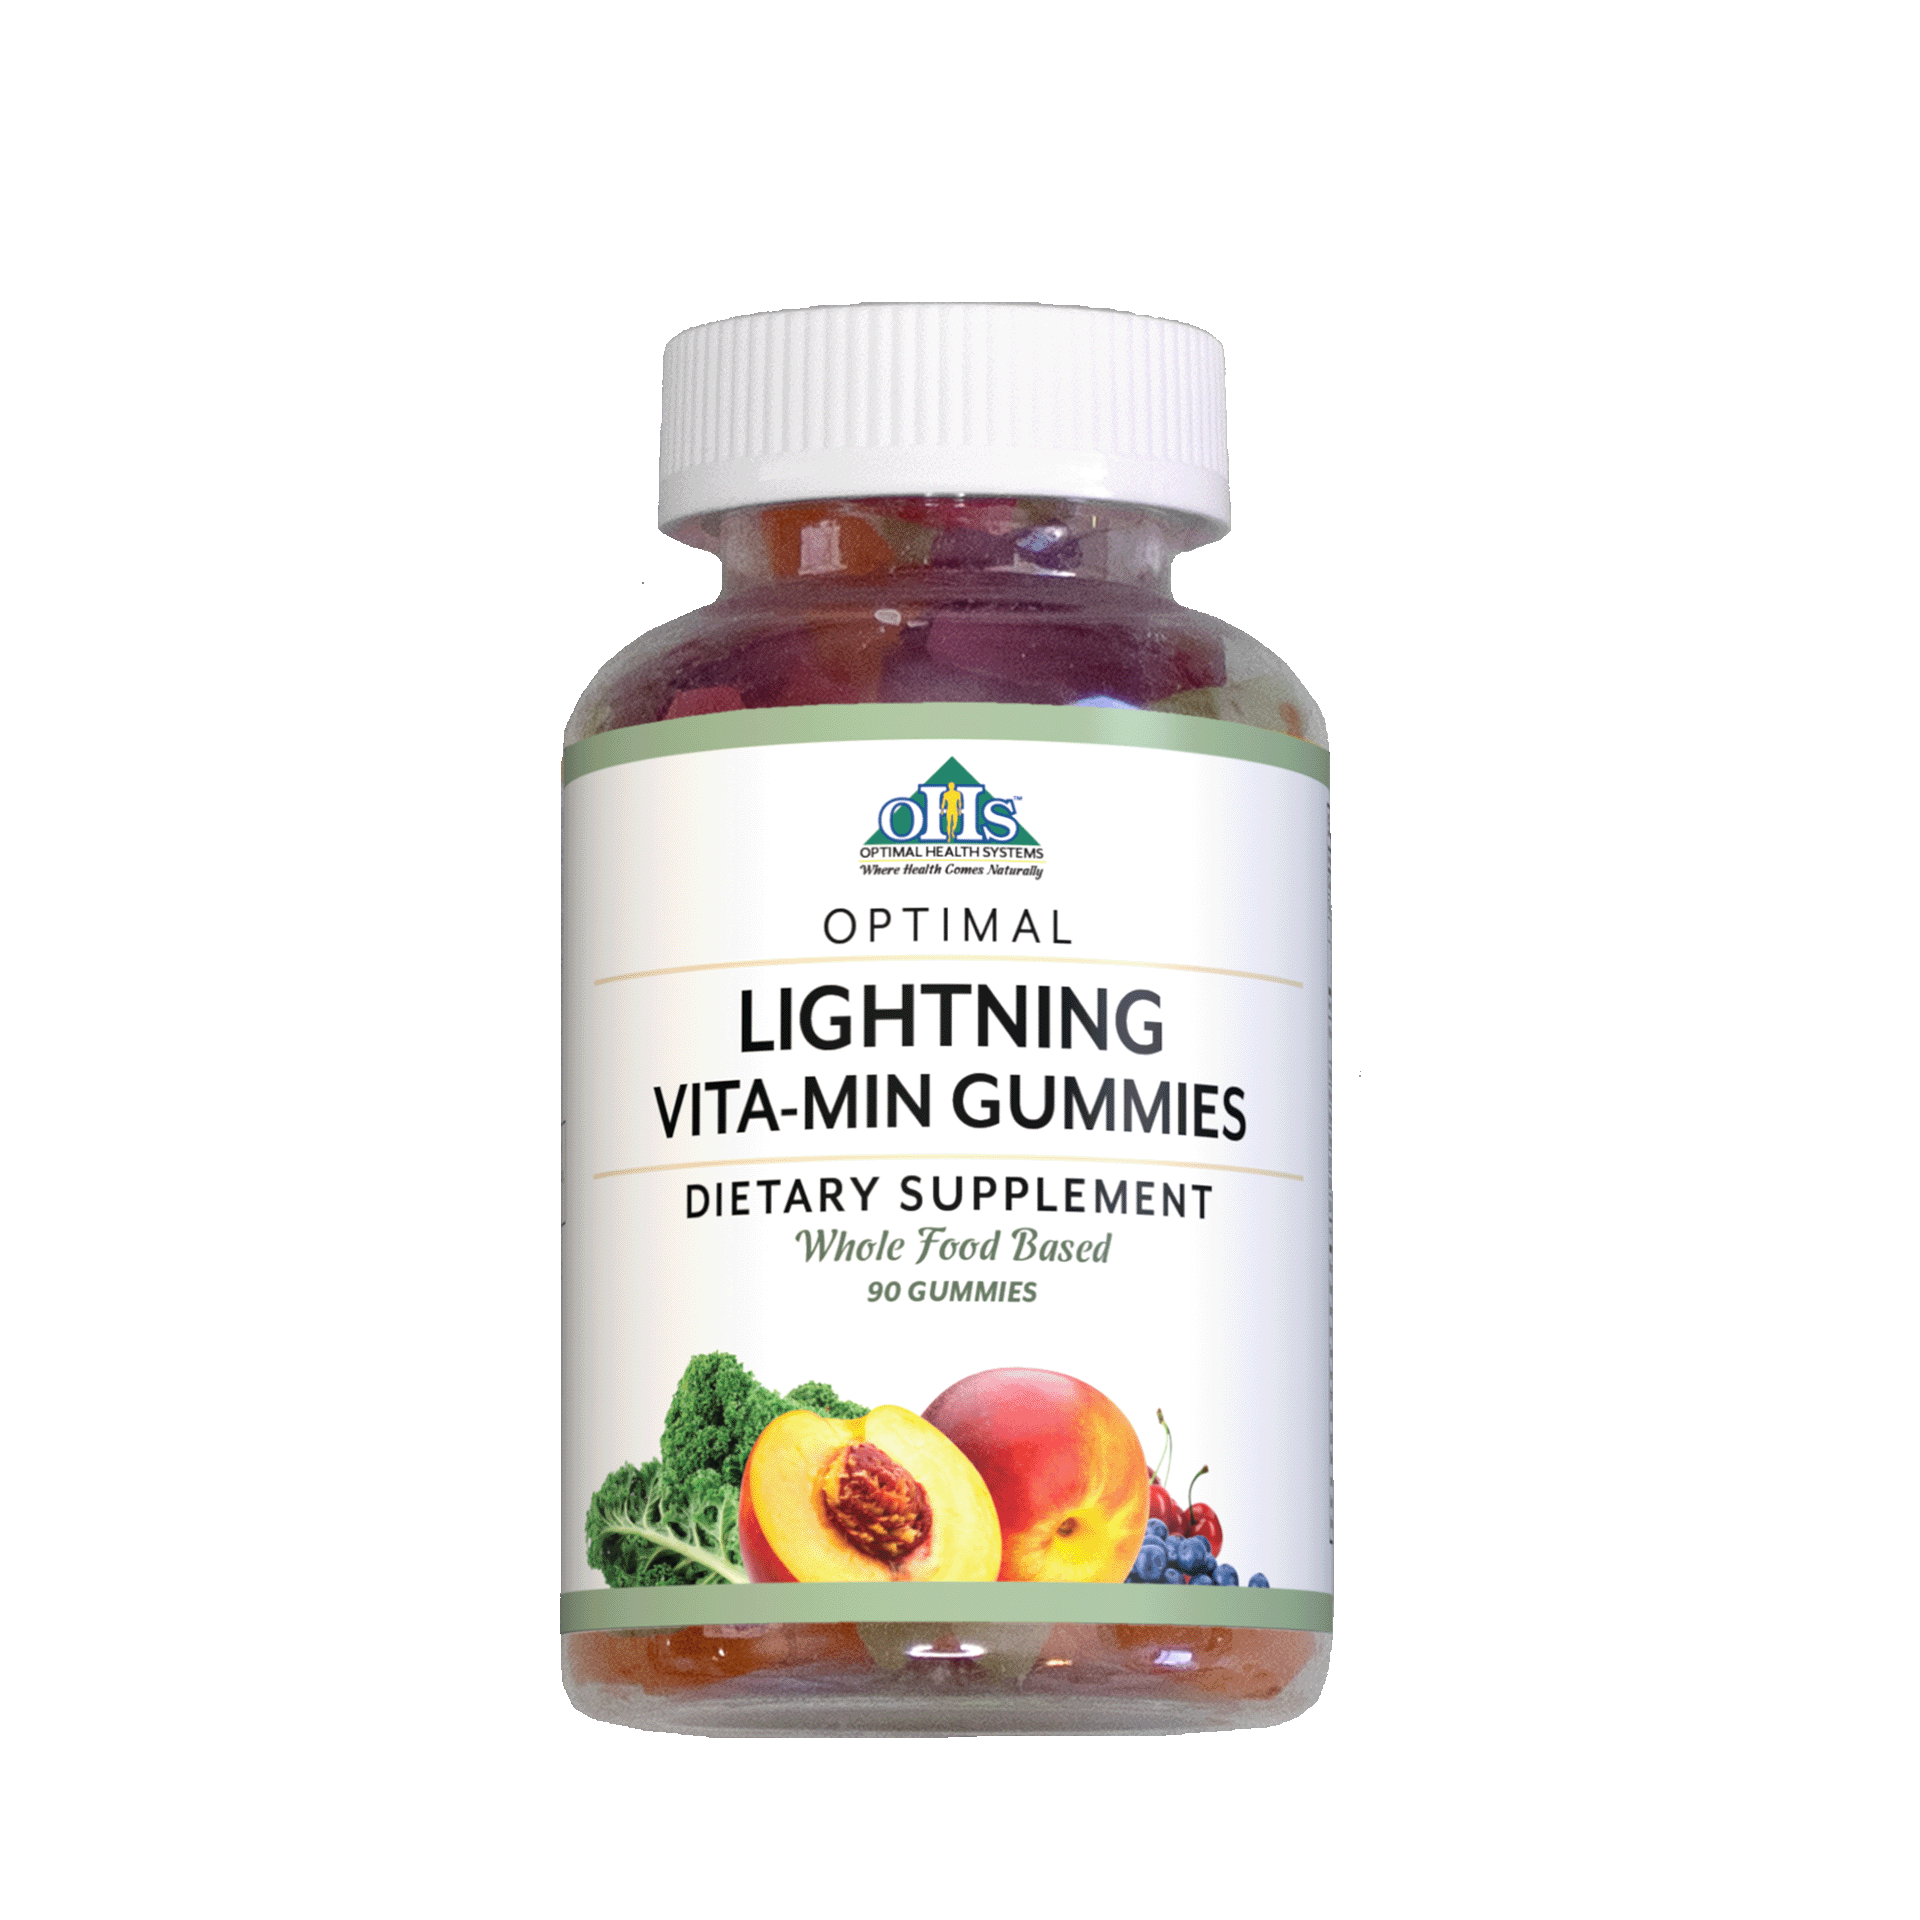 Image of a bottle of Optimal Lightning Vita-Min Gummies.